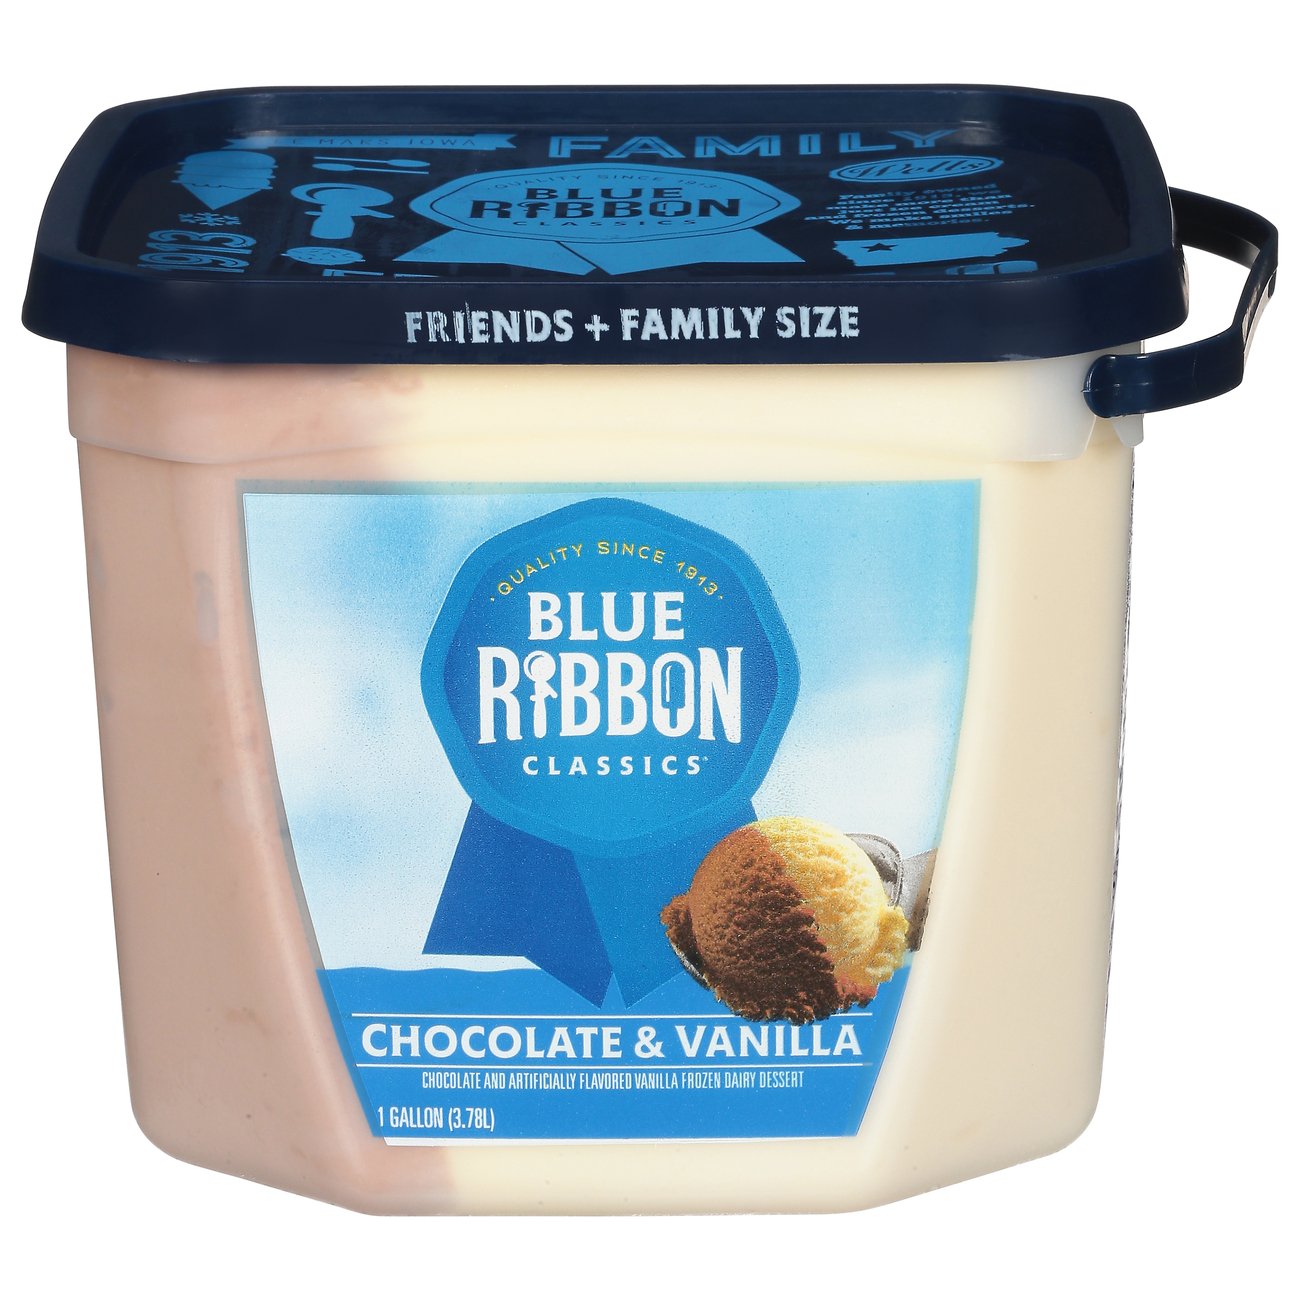 Blue Ribbon Classics Chocolate & Vanilla Ice Cream - Shop ...